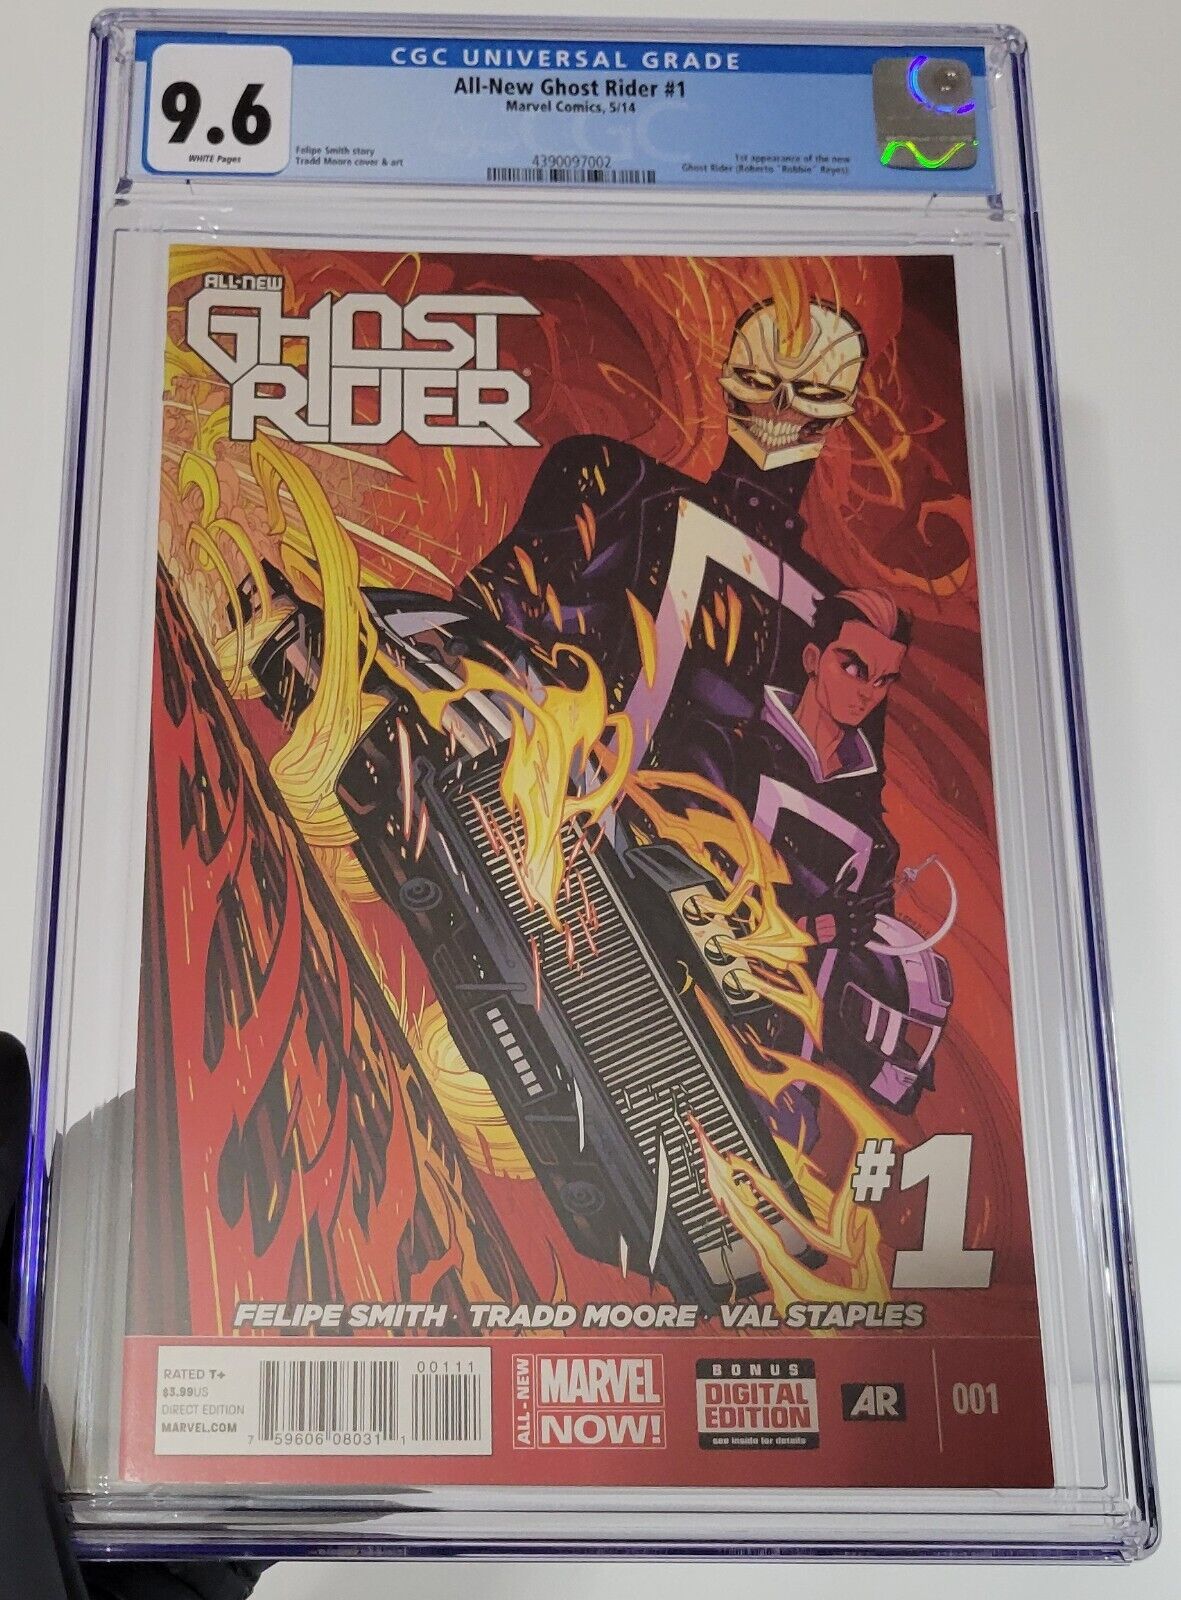 All New Ghost Rider #1 CGC 9.6 Marvel Comics 2014